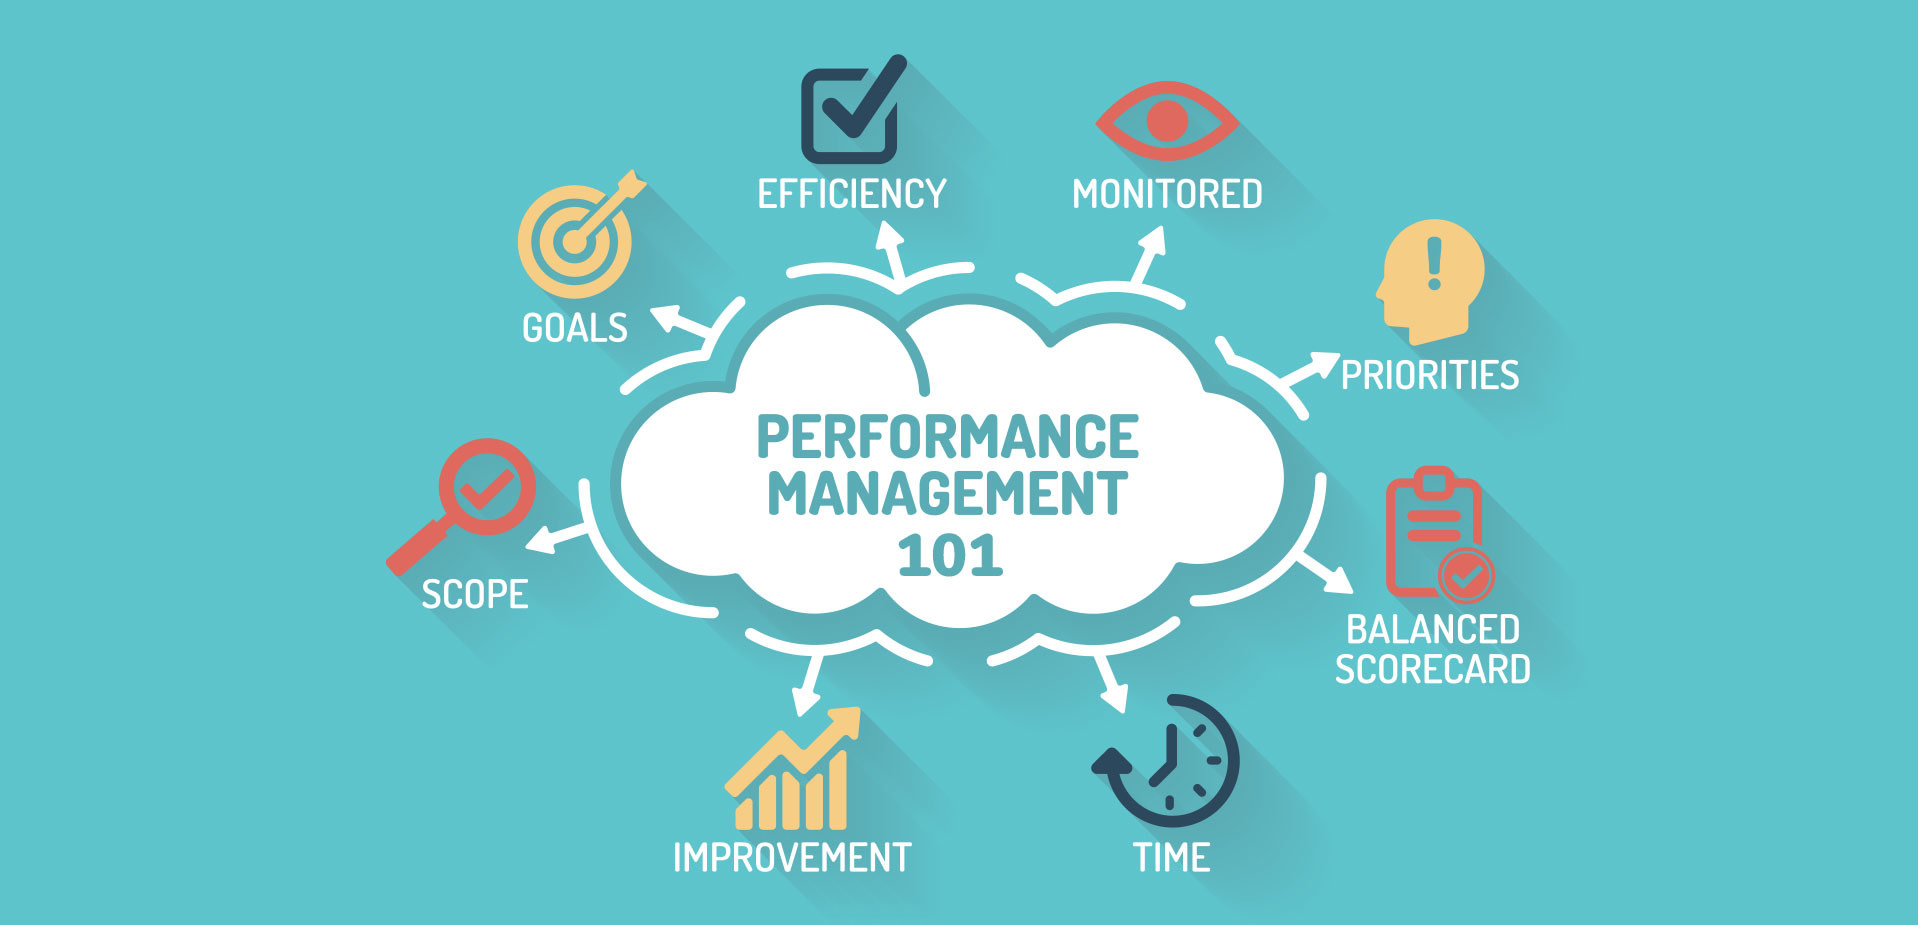 Performance Management 101